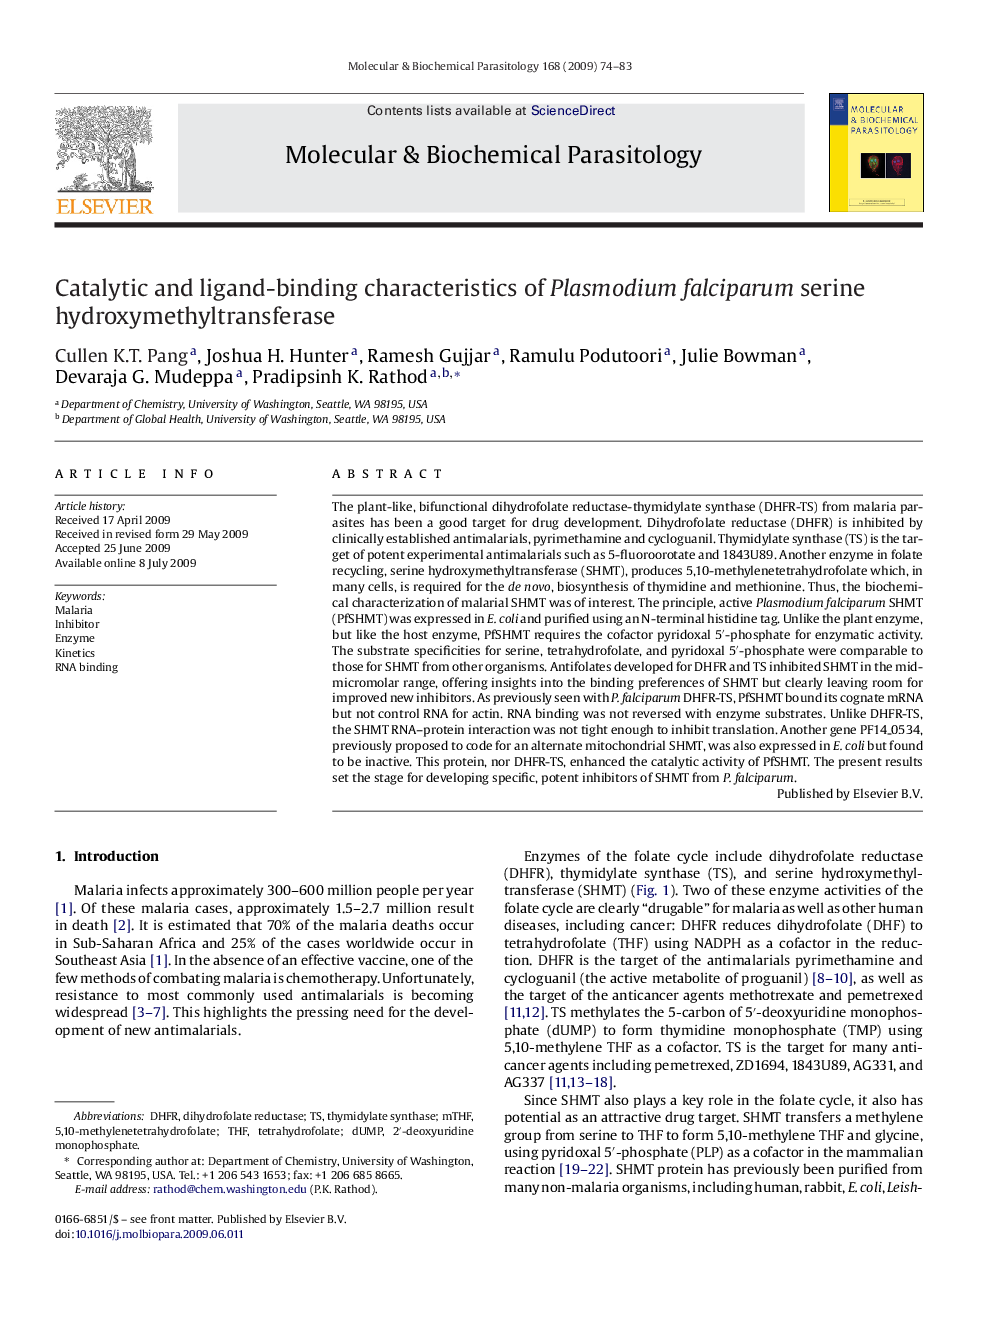 Catalytic and ligand-binding characteristics of Plasmodium falciparum serine hydroxymethyltransferase